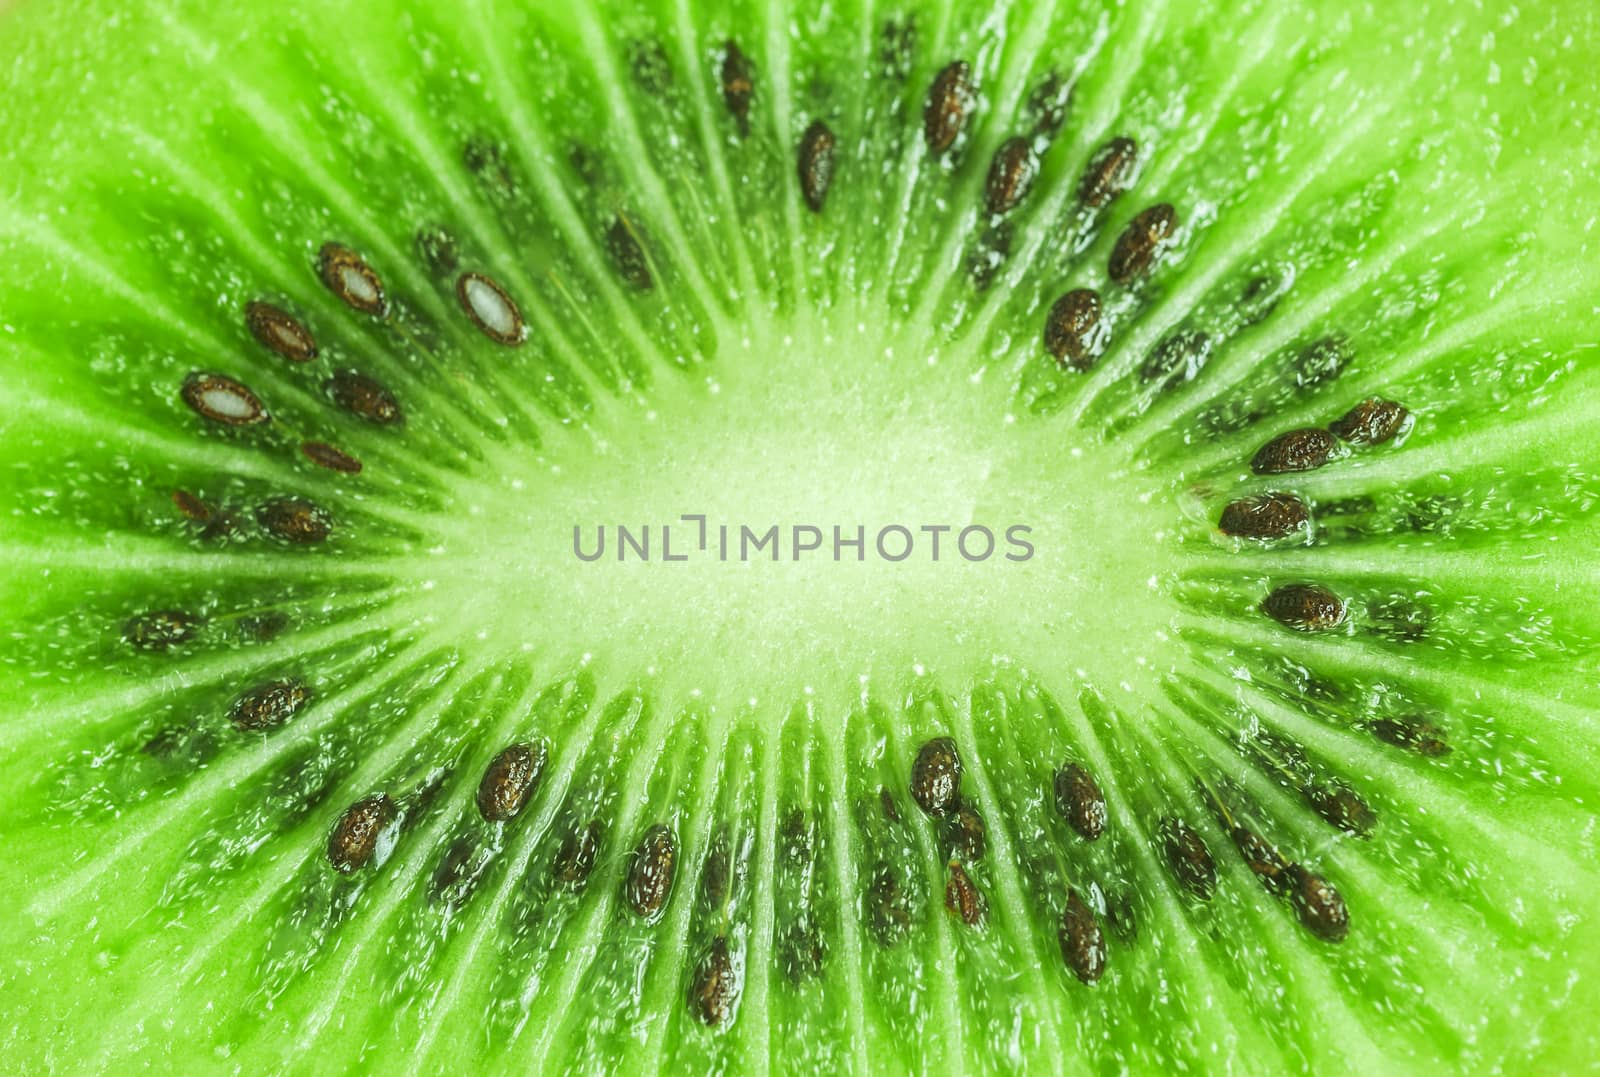 Green kiwi fruit by jimbophoto